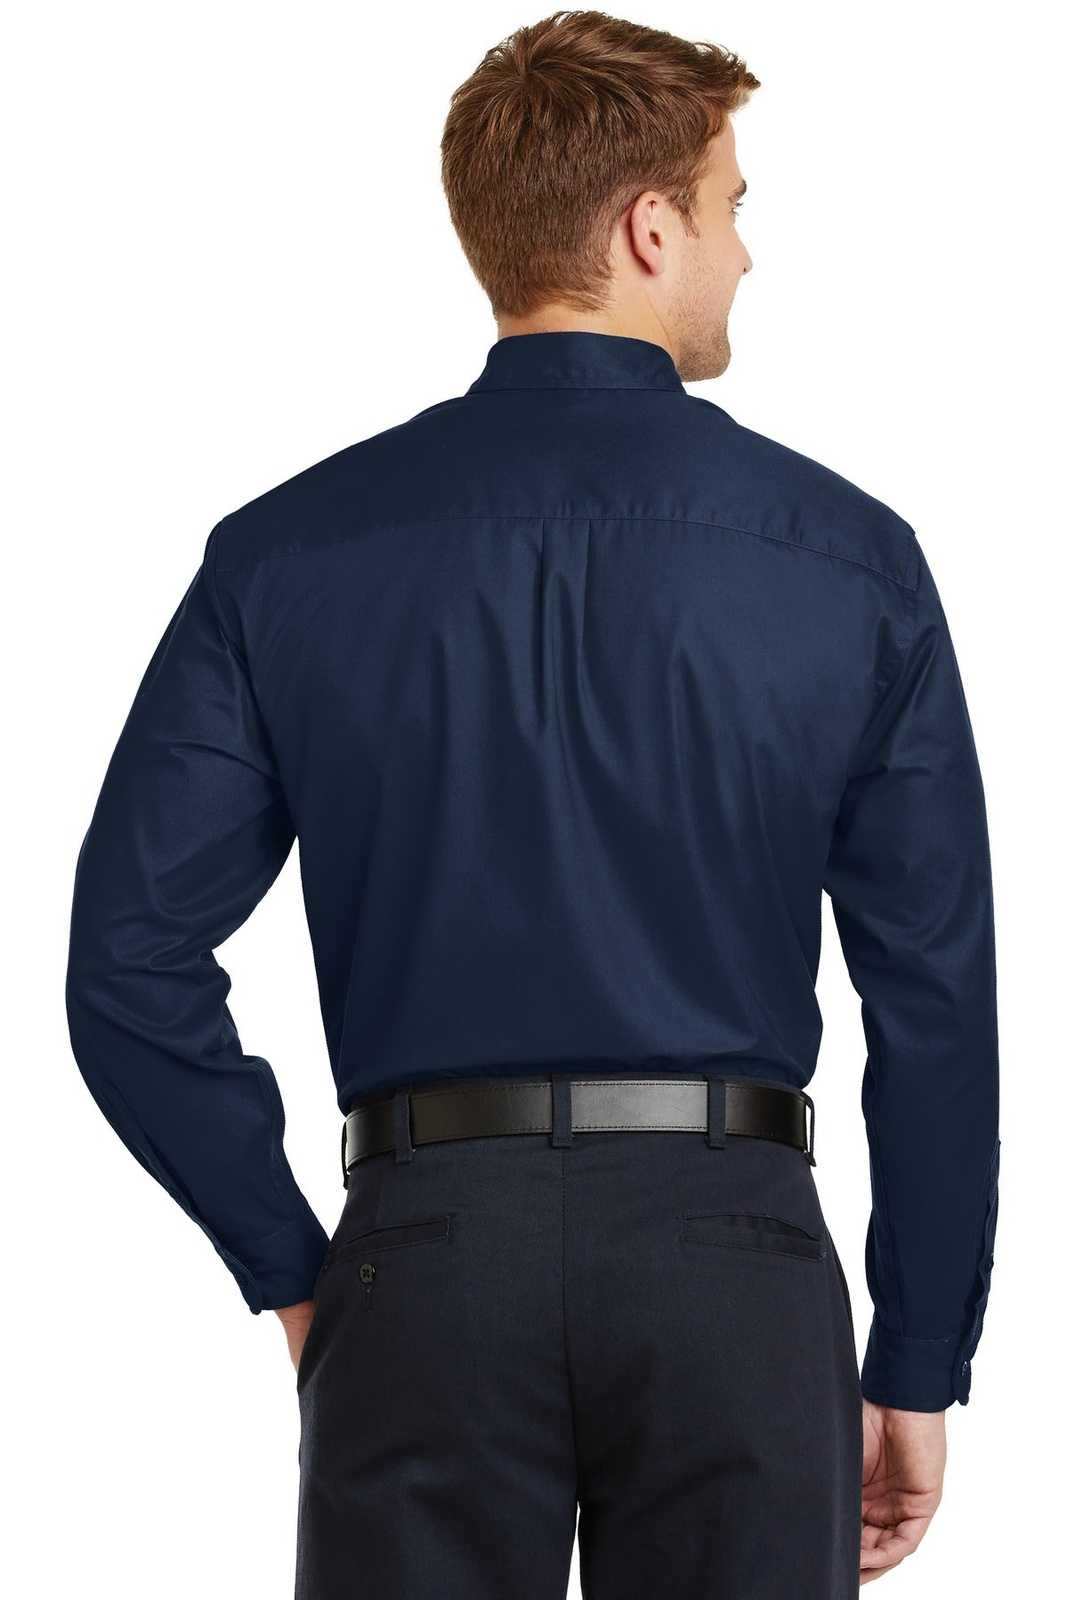 CornerStone SP17 Long Sleeve Superpro Twill Shirt - Navy - HIT a Double - 2